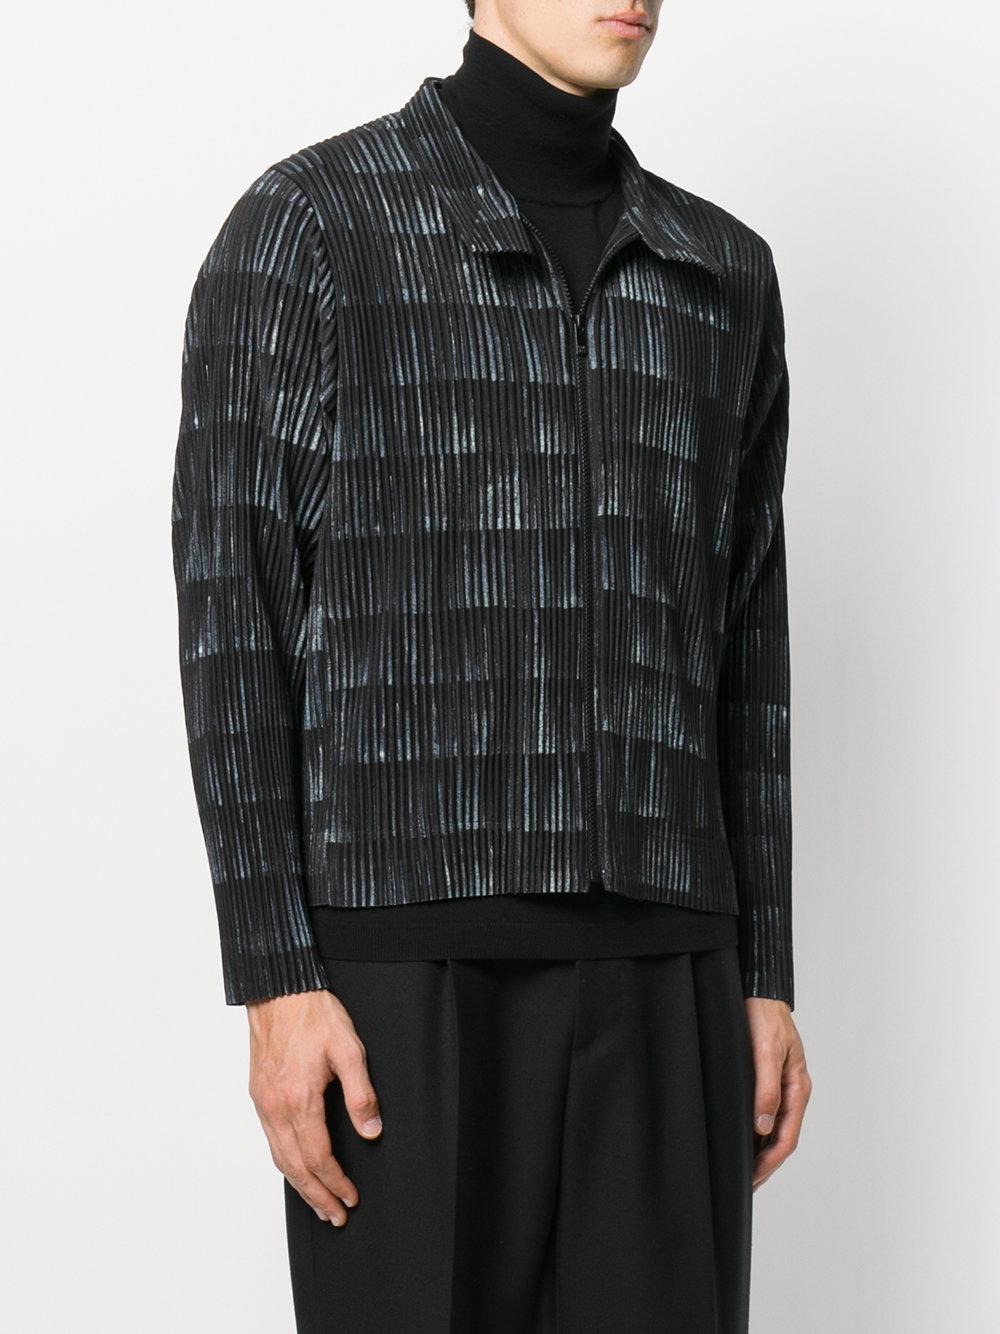 Lyst - Homme Plissé Issey Miyake Pleated Zip Jacket in Black for Men